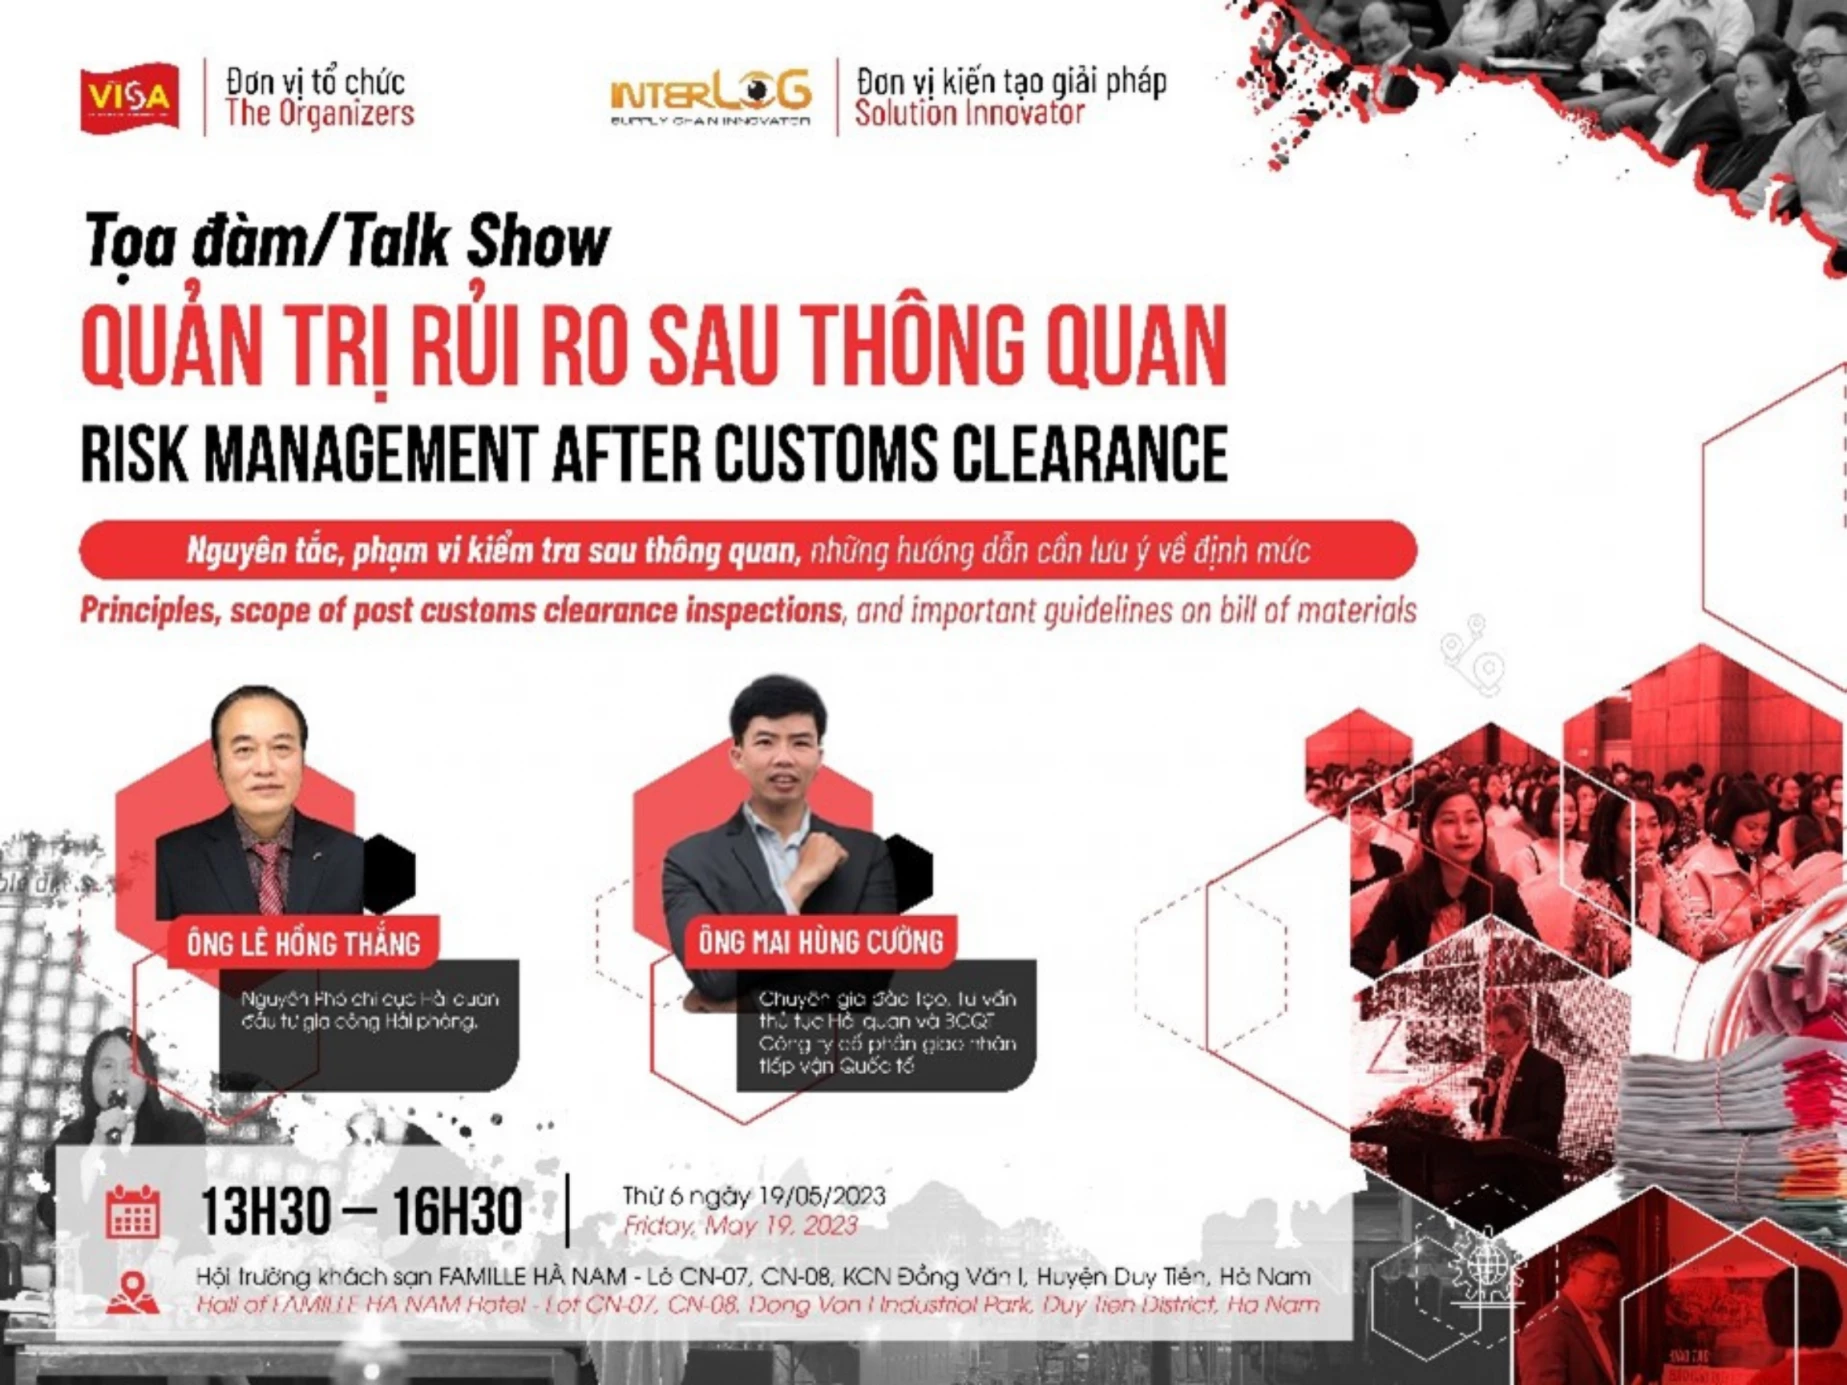 [Ha Nam] InterLOG and VISA Alliance organize a seminar on "Risk Management After Customs Clearance"